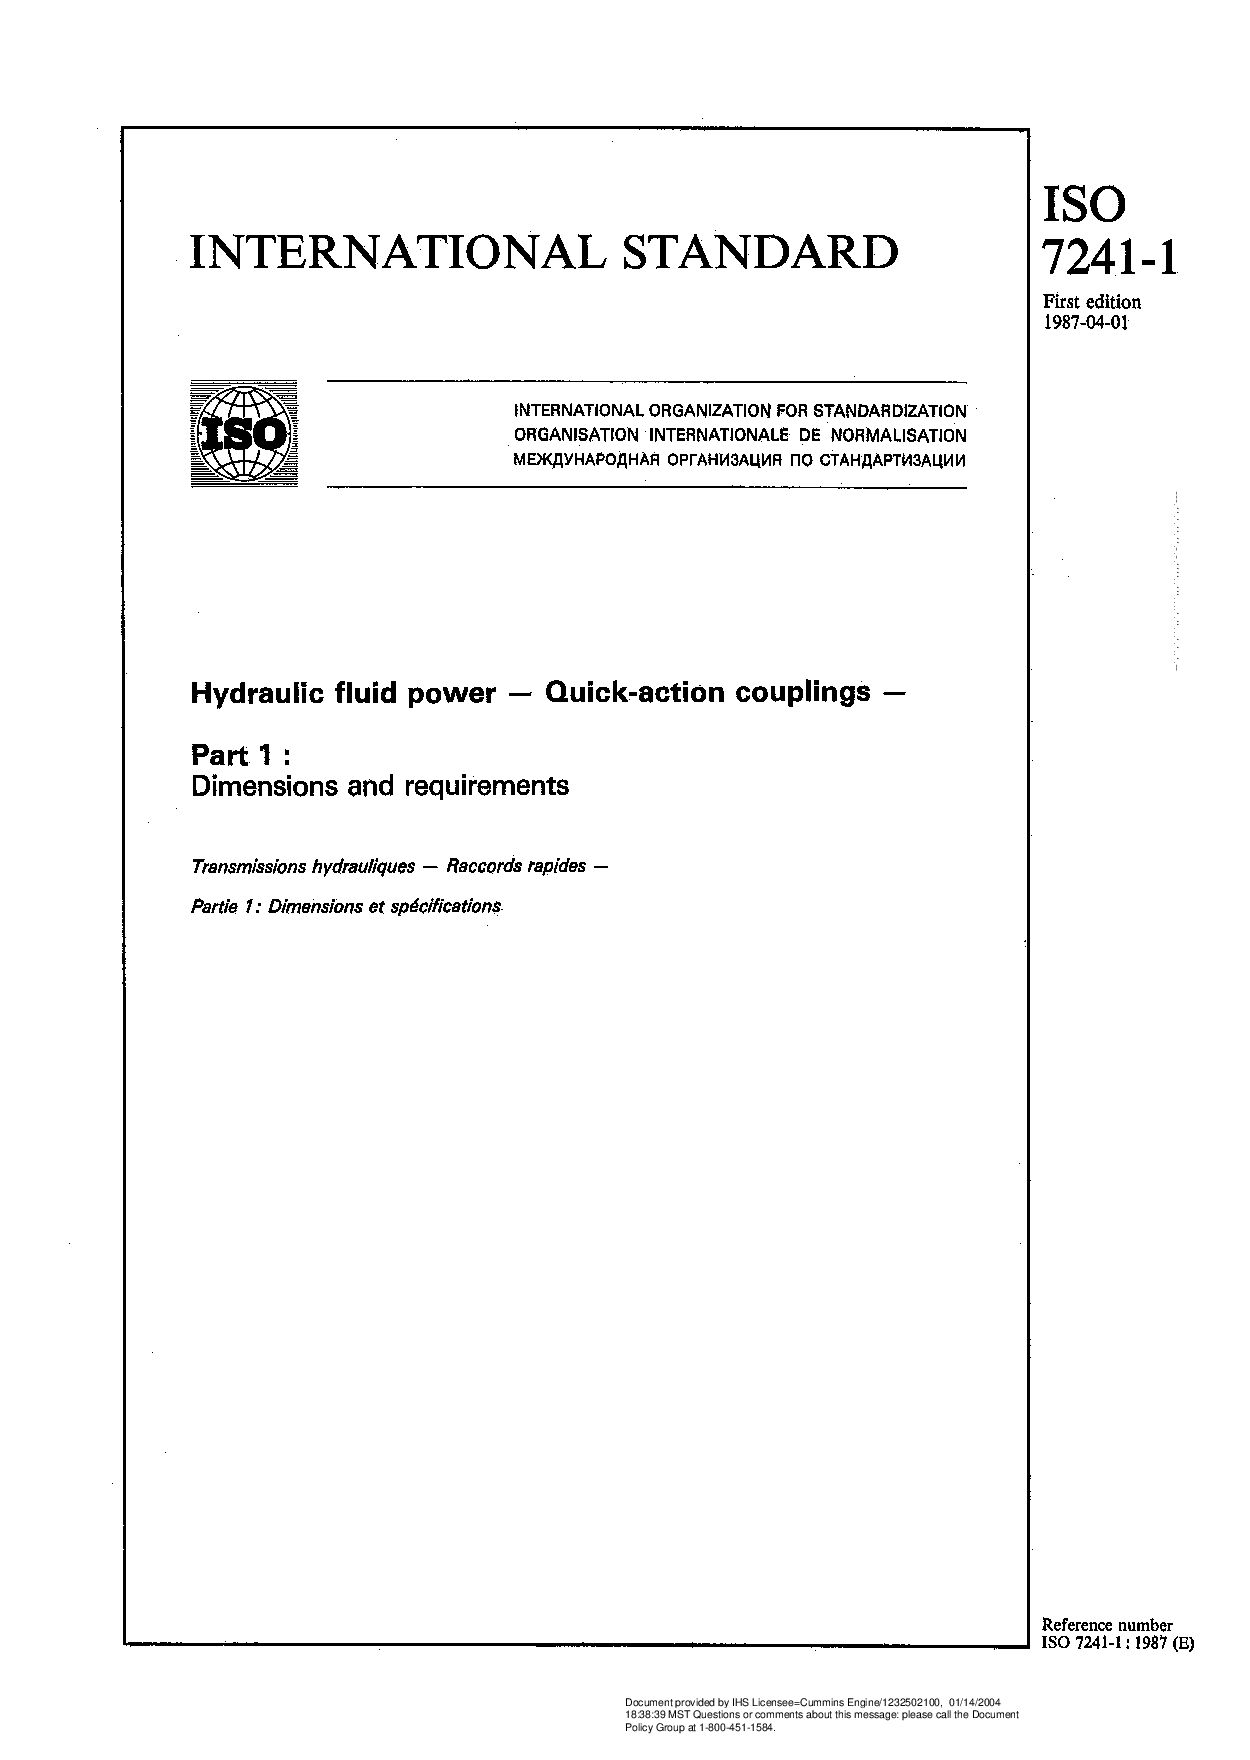 ISO 7241-1:1987封面图